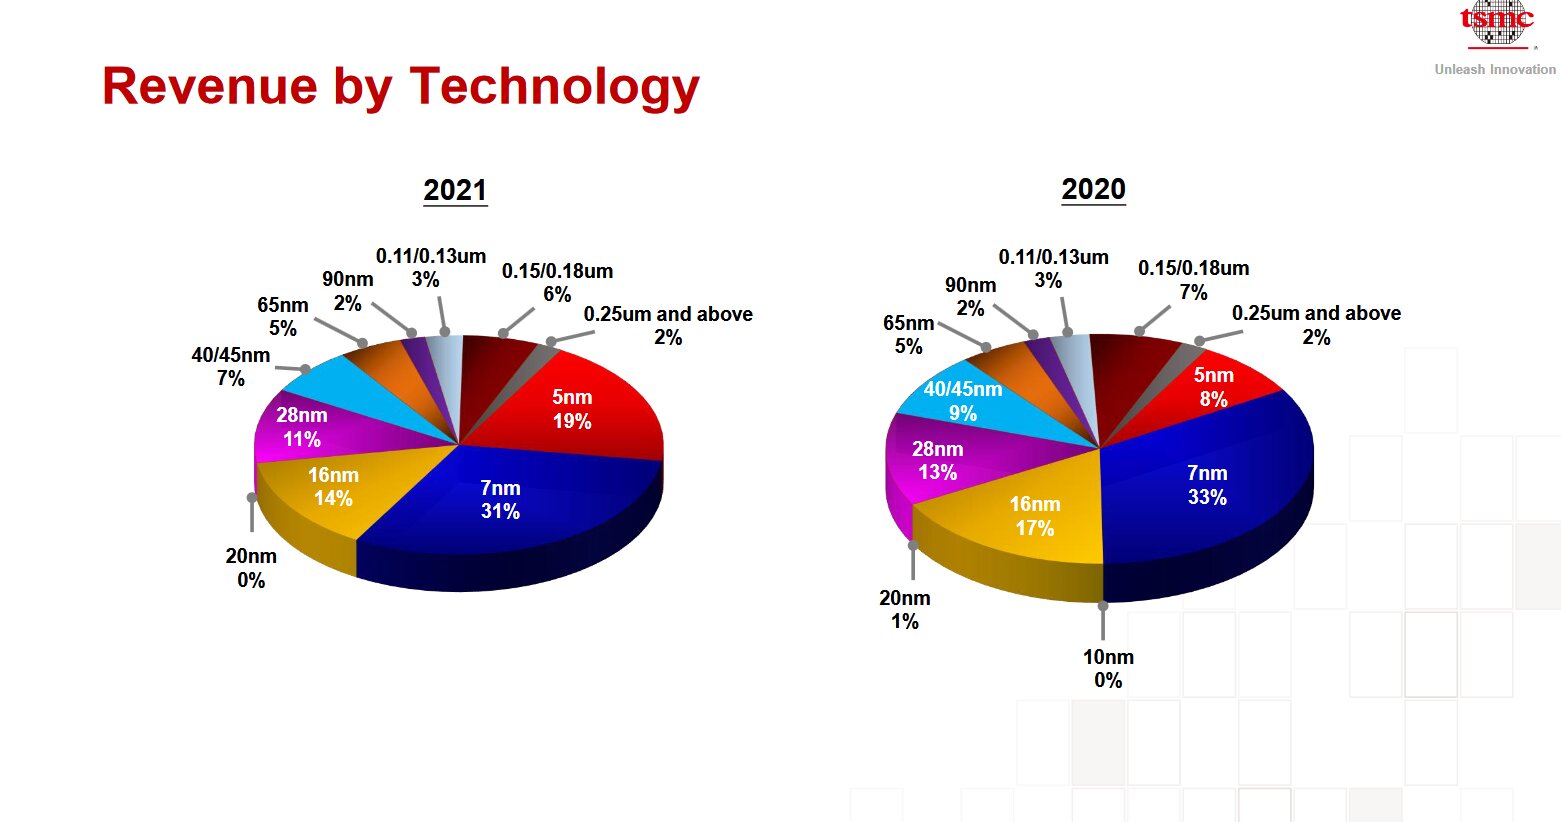 TSMCs Umsatz nach Technologiestufe in 2021